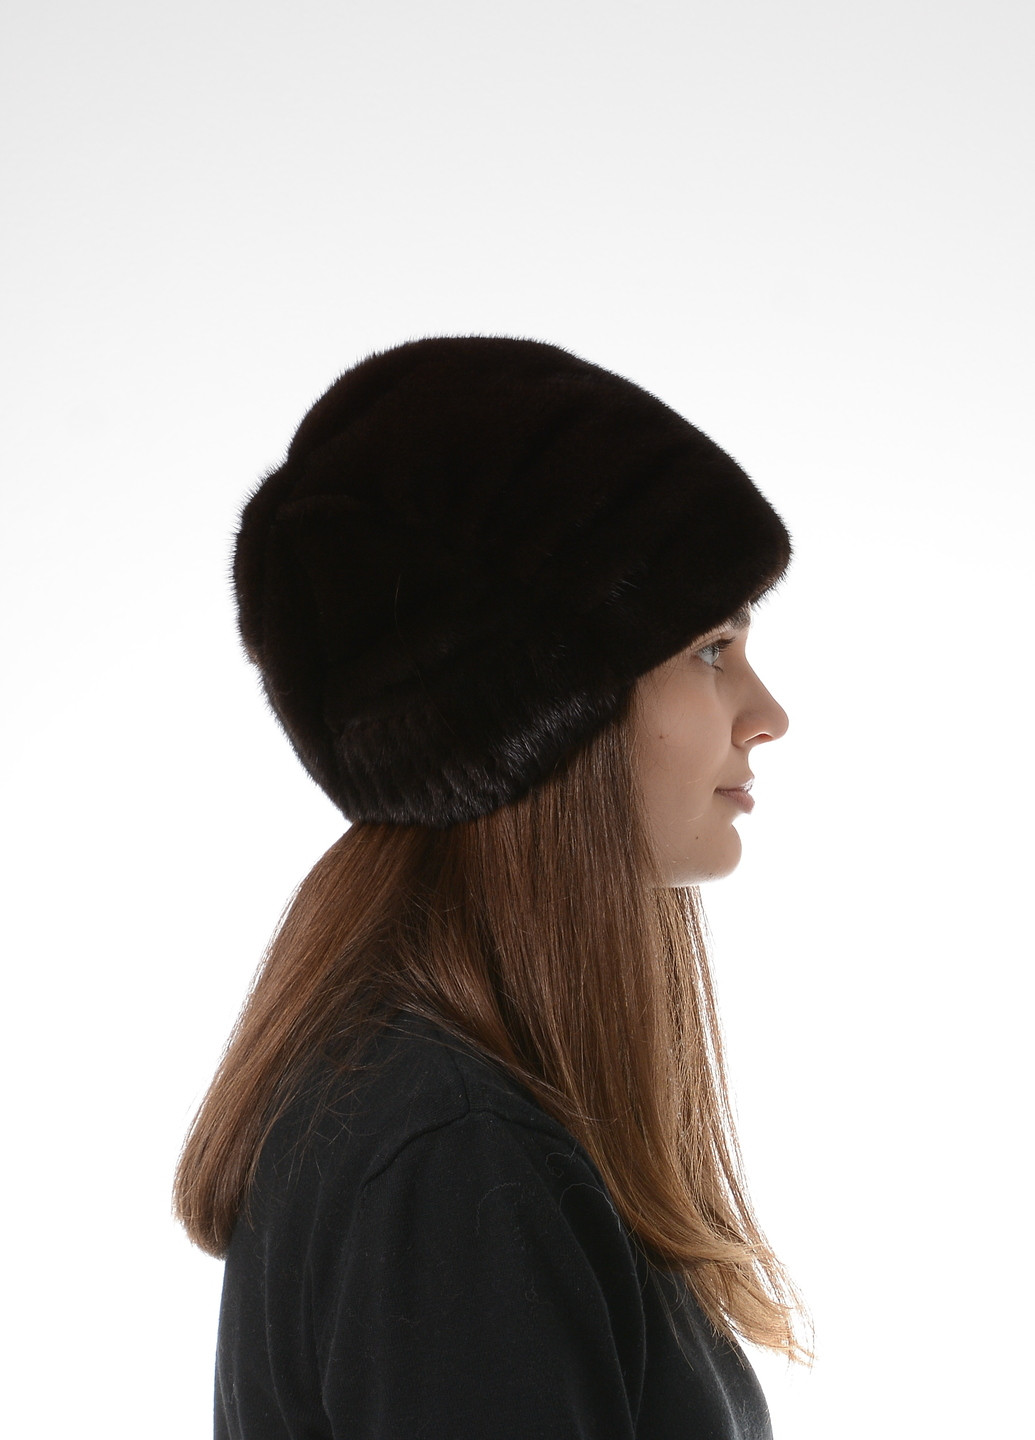 Жіноча зимова норкова шапка кубанка з цільного натурального хутра Меховой Стиль листок (257222730)